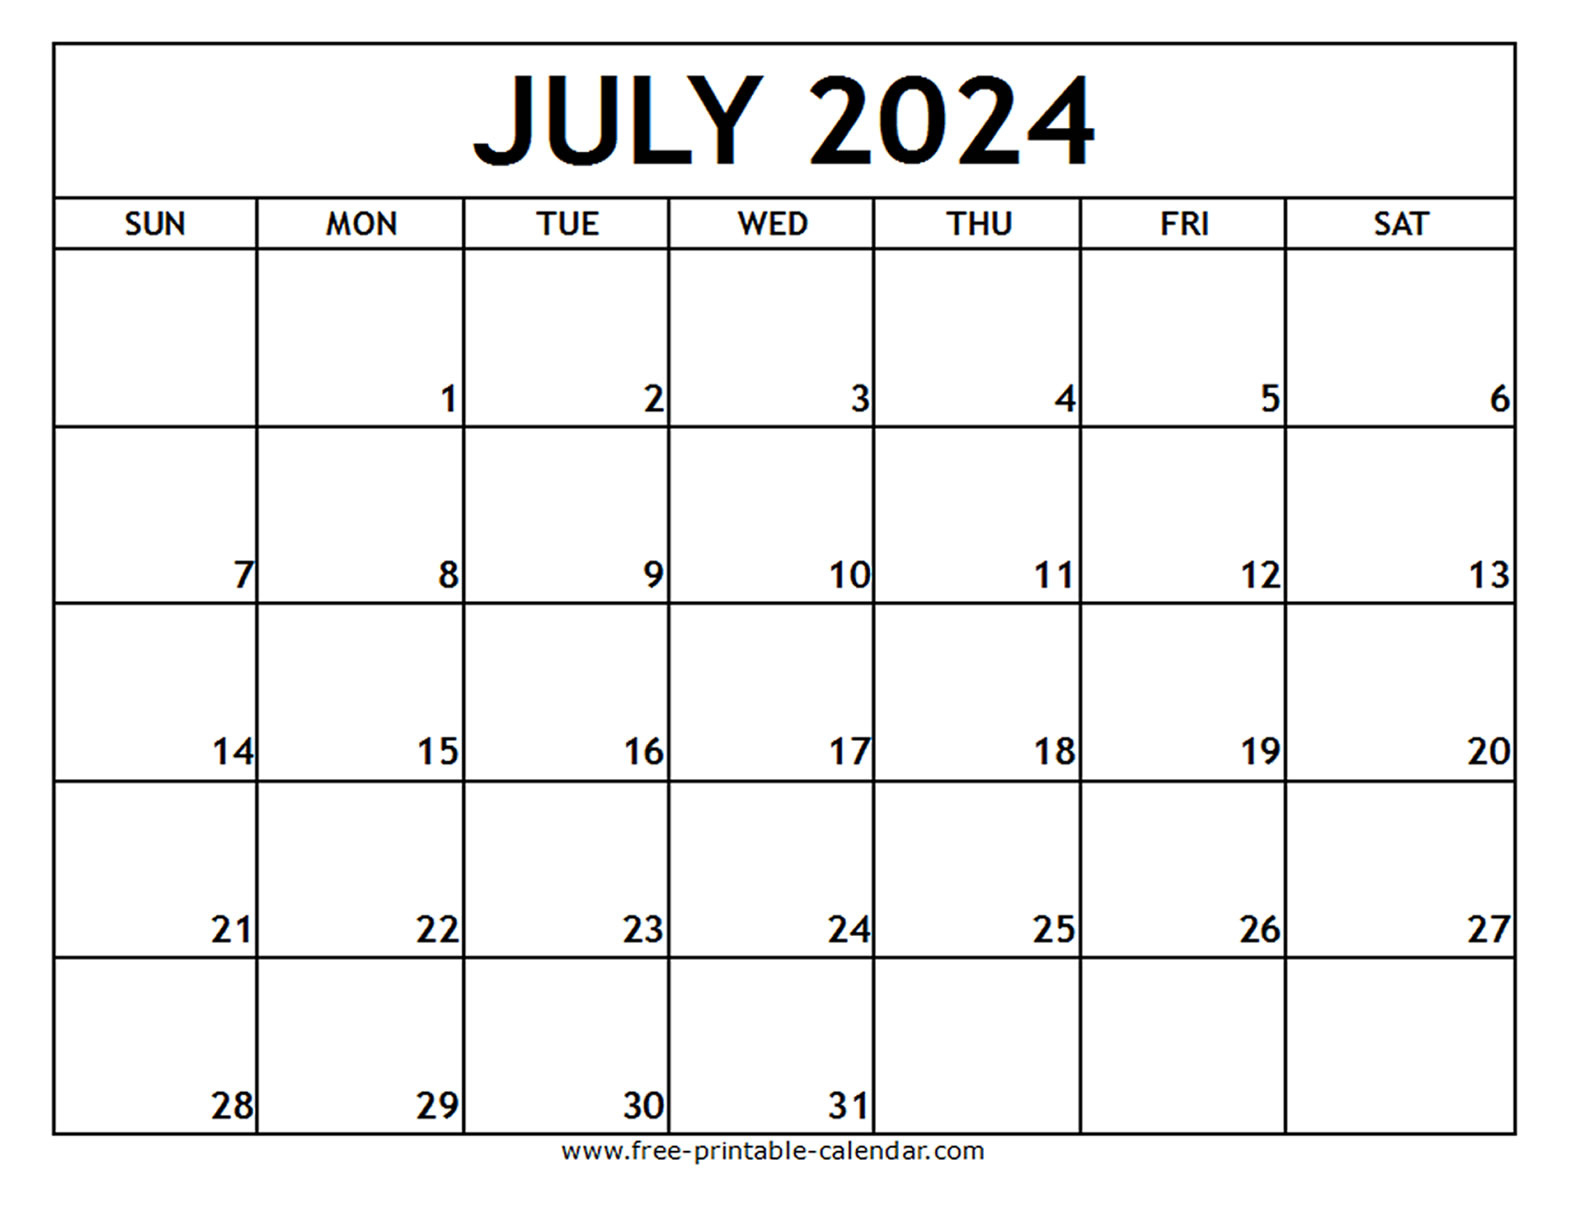 July 2024 Printable Calendar - Free-Printable-Calendar intended for Free July 2024 Calendar Template